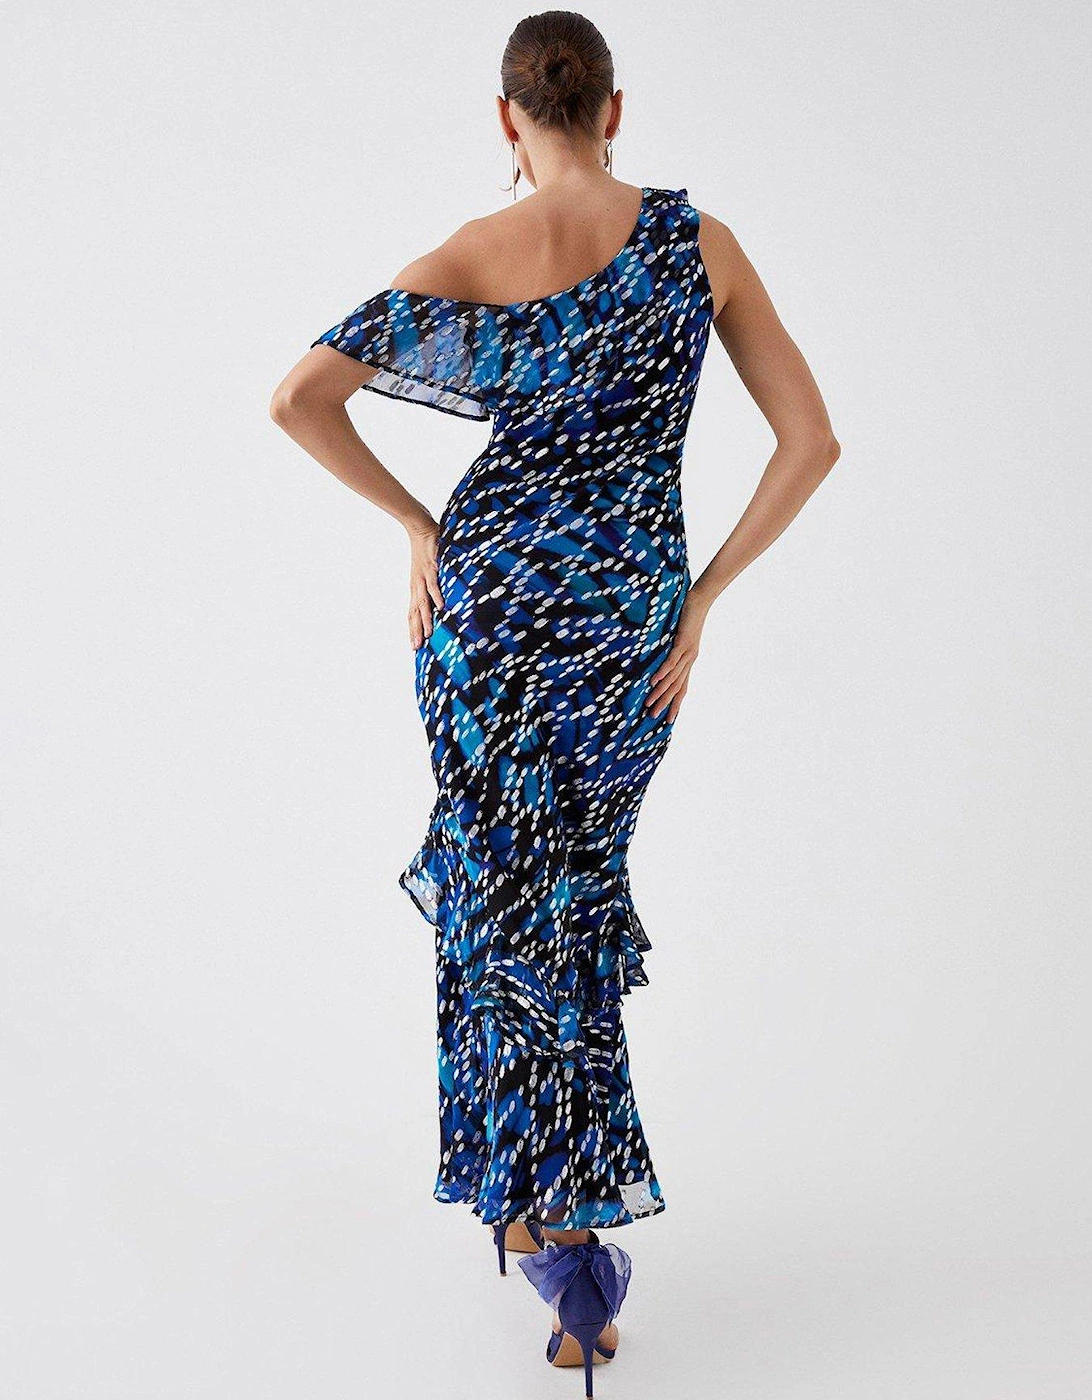 Julie Kuyath One Shoulder Metallic Maxi Dress - Blue